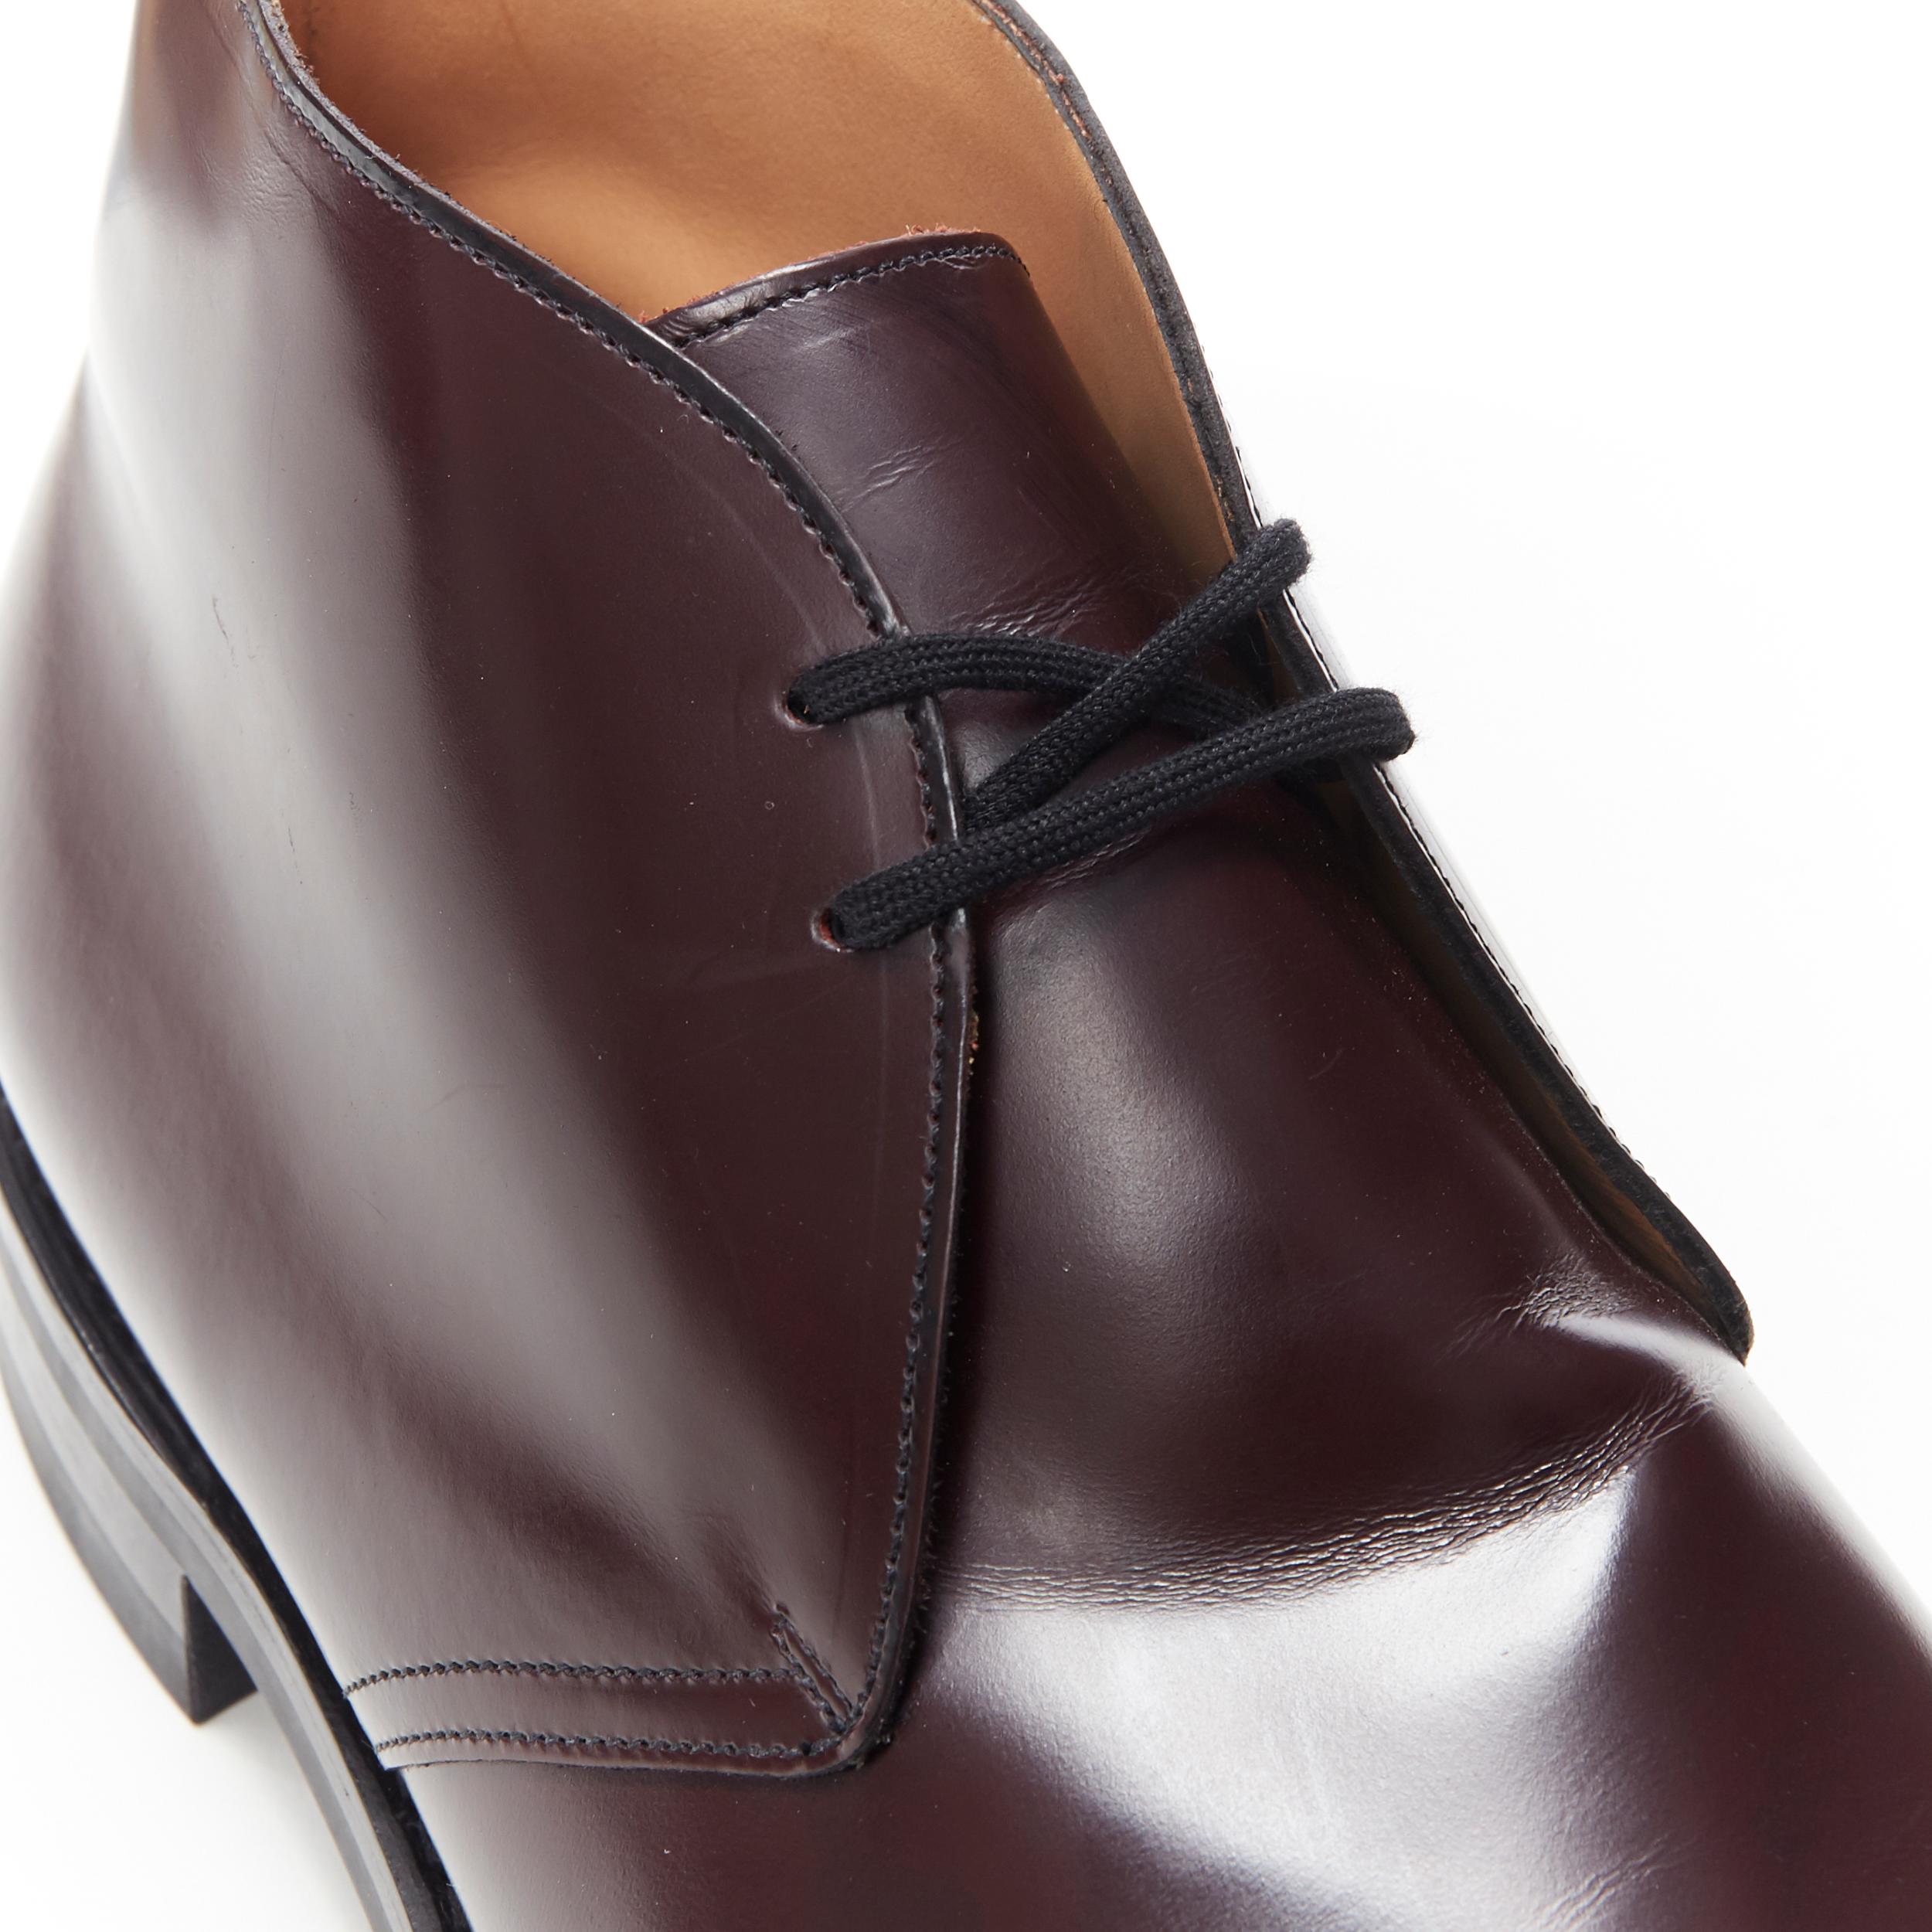 new CHURCHS Ryder 3 Burgundy Bright Calf polished leather chukka boots UK11 US12 3